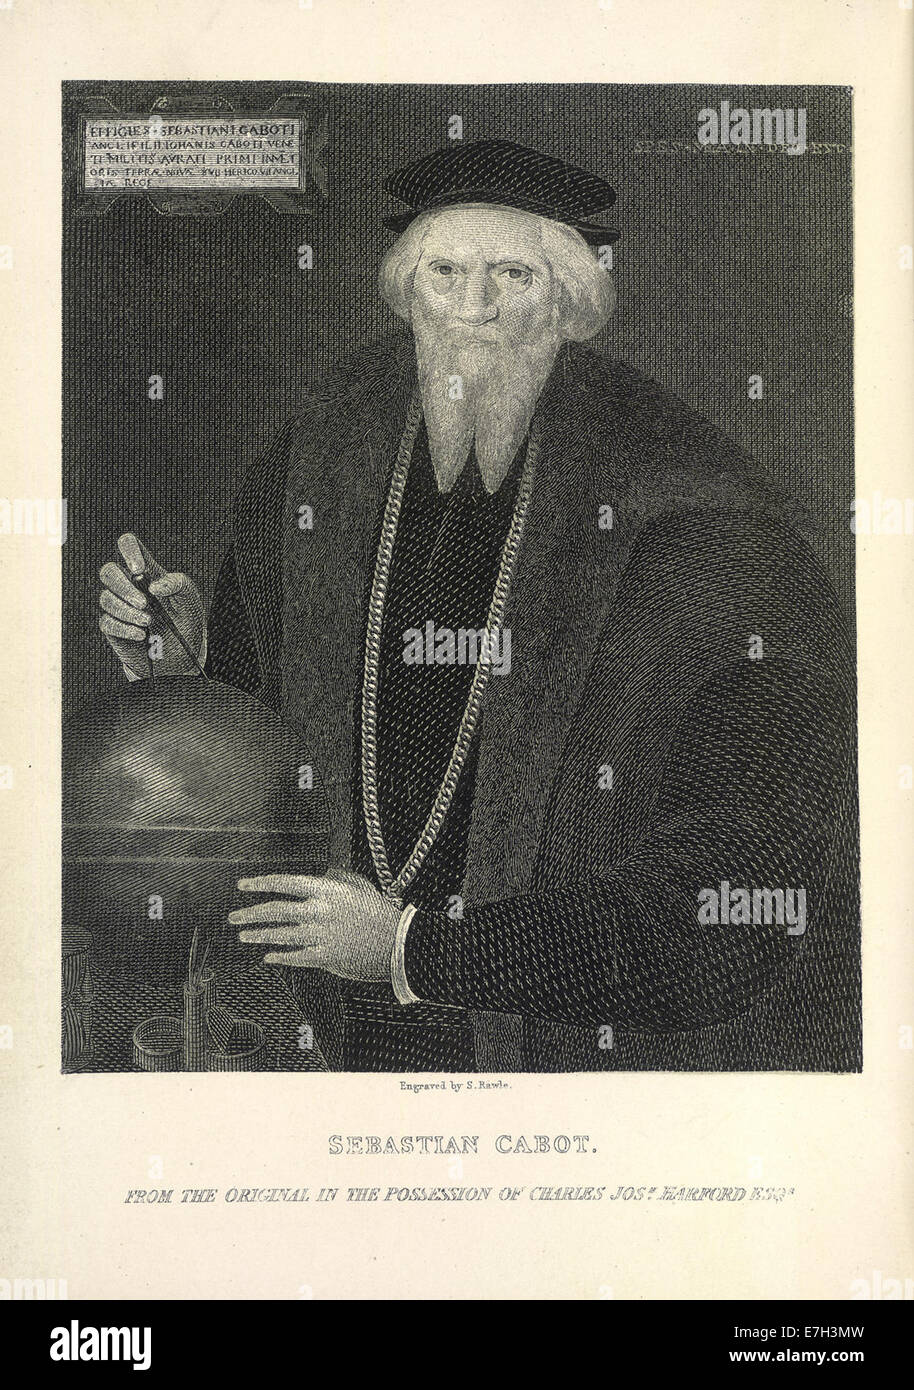 Sebastian Cabot - Nicholls, Sebastian Cabot (1869), frontispiece - BL Stock Photo